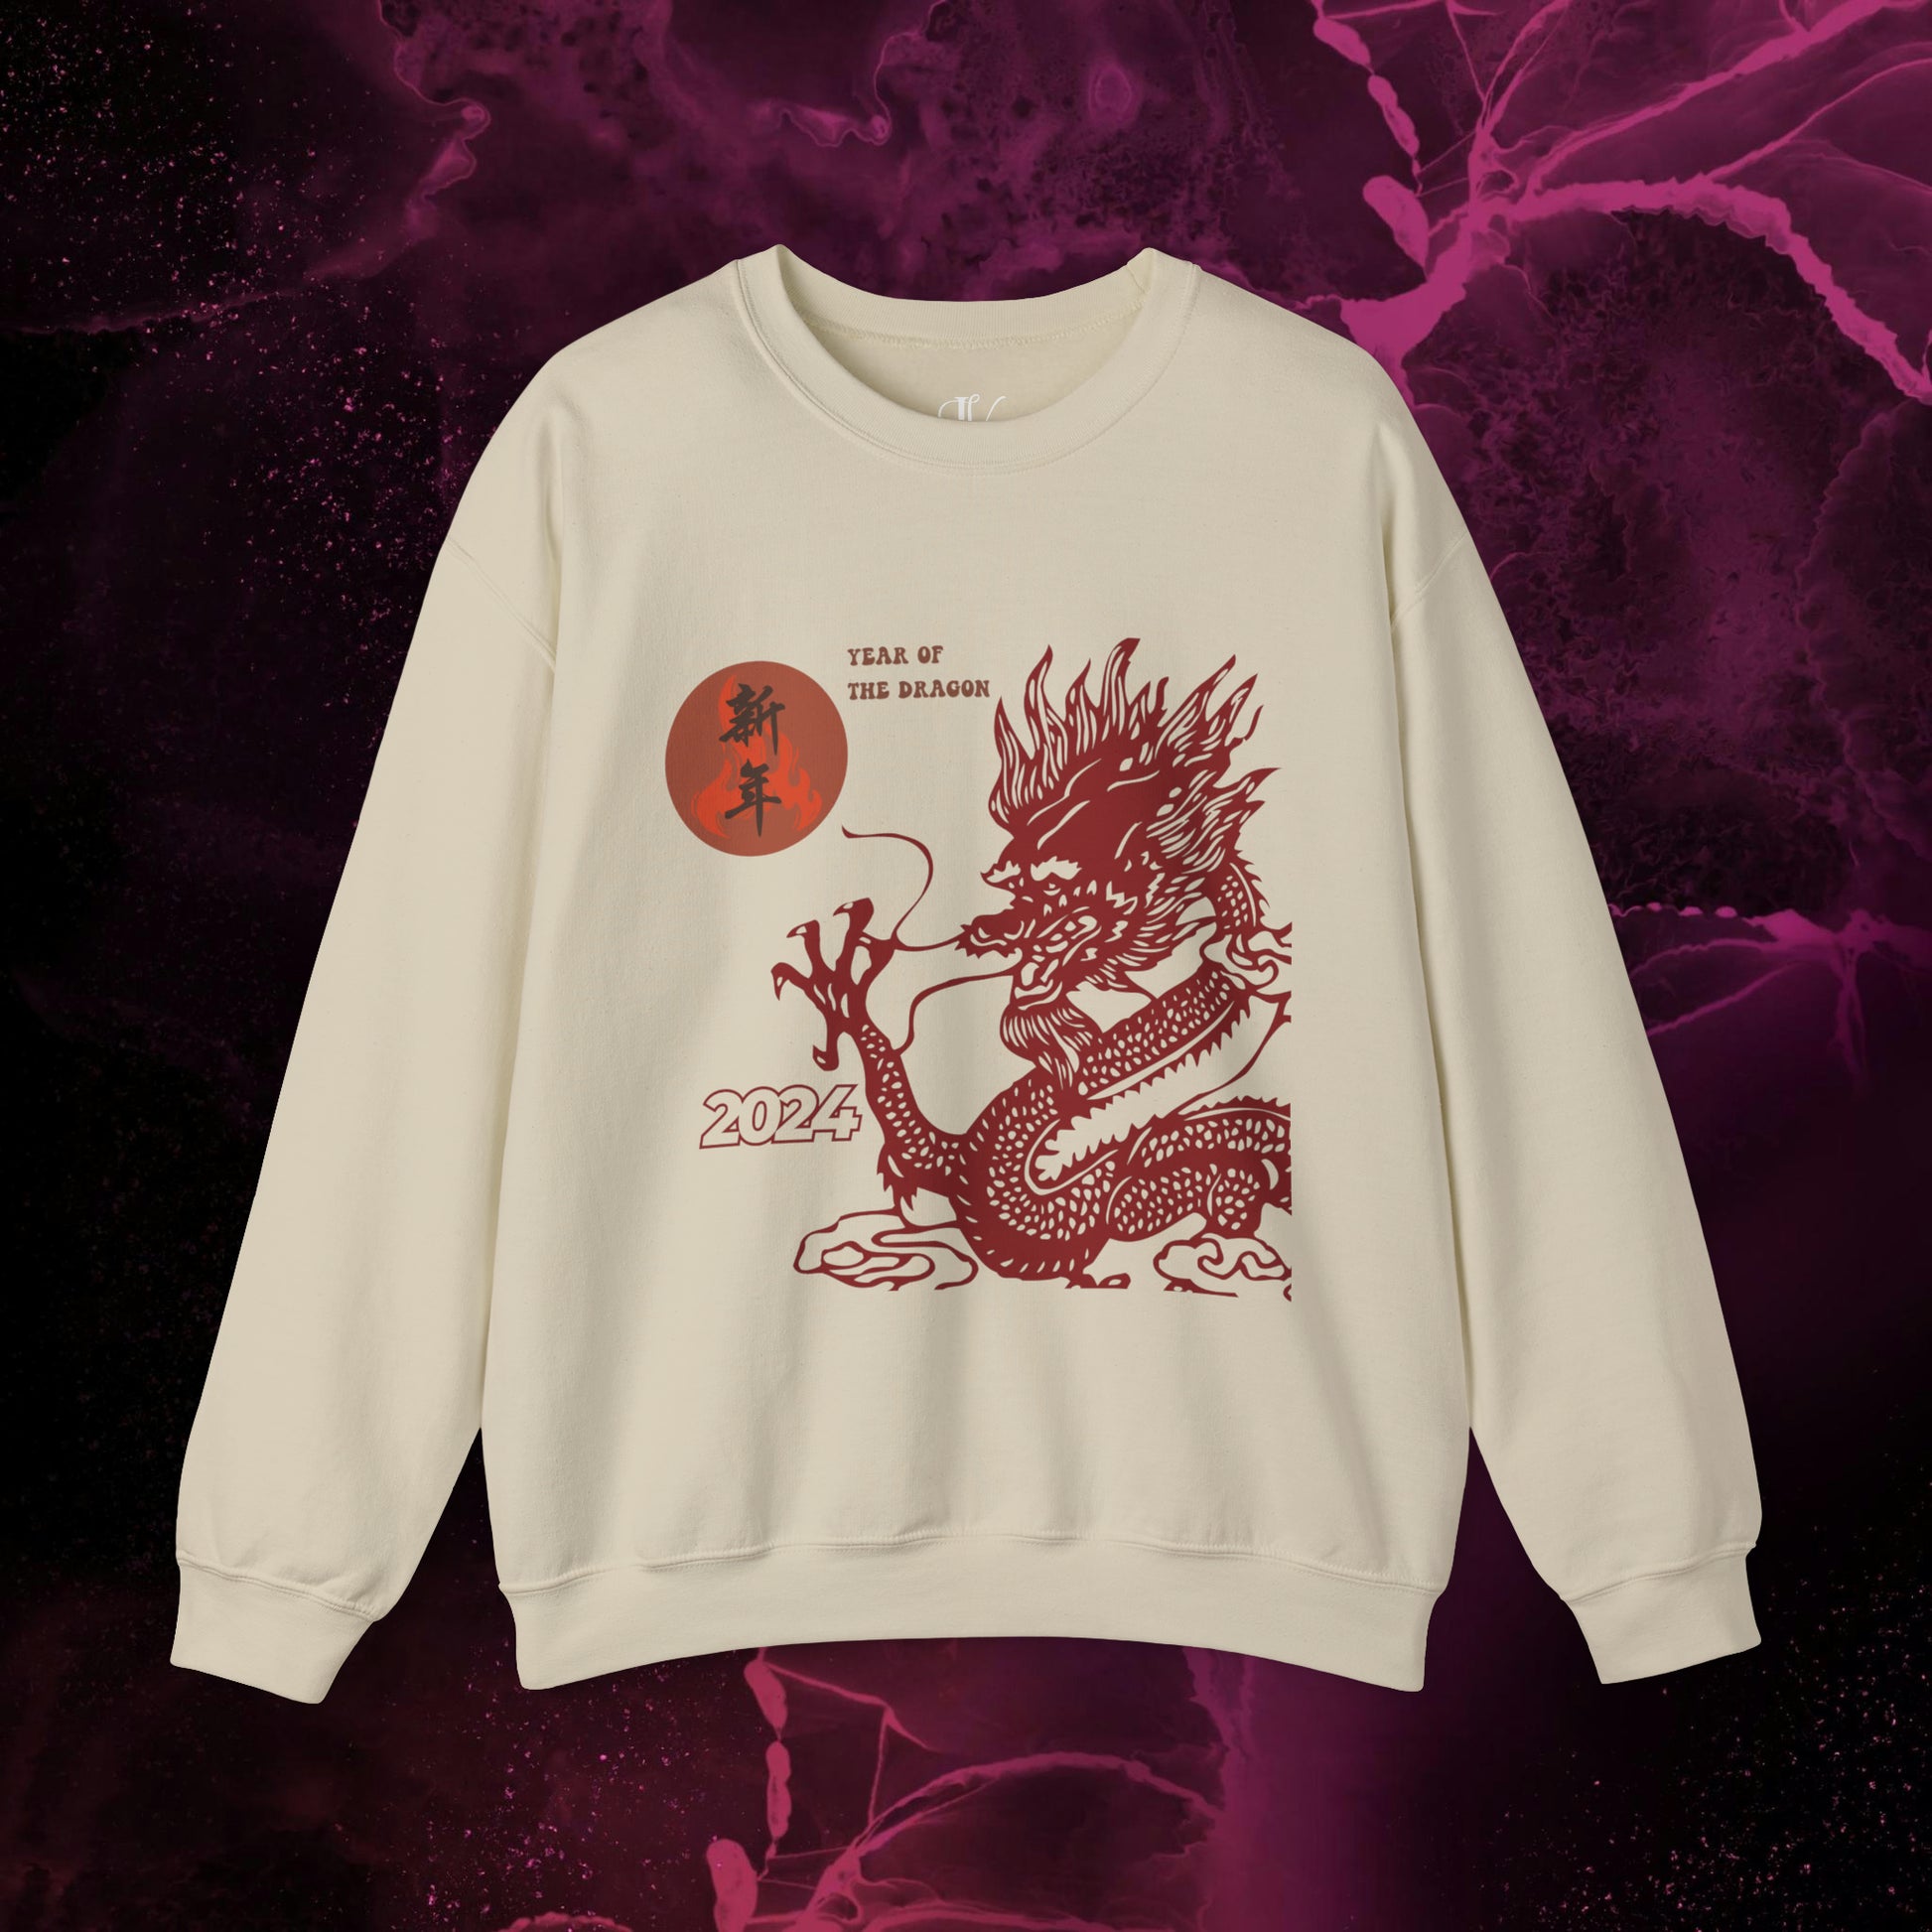 Year of the Dragon Sweatshirt - 2024 Chinese Zodiac Shirt for Lunar New Year Sweatshirt S Sand 